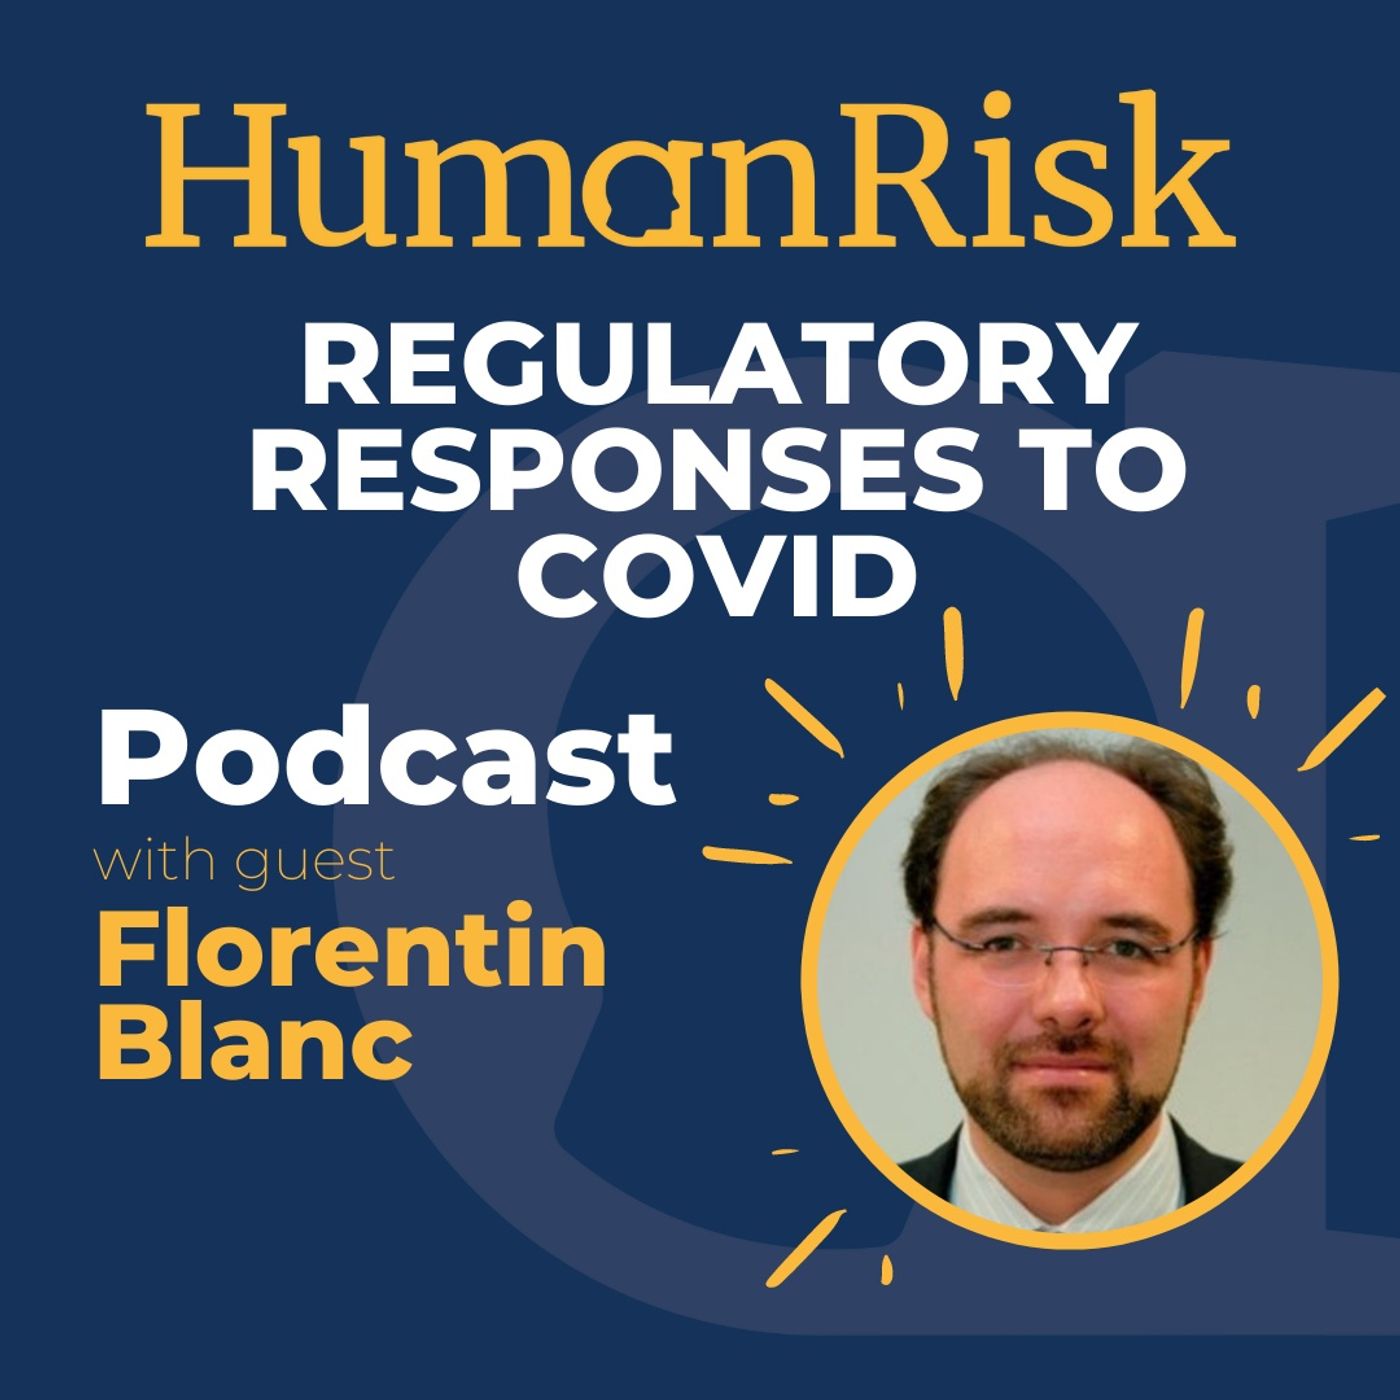 Florentin Blanc on Regulatory Responses to COVID 19